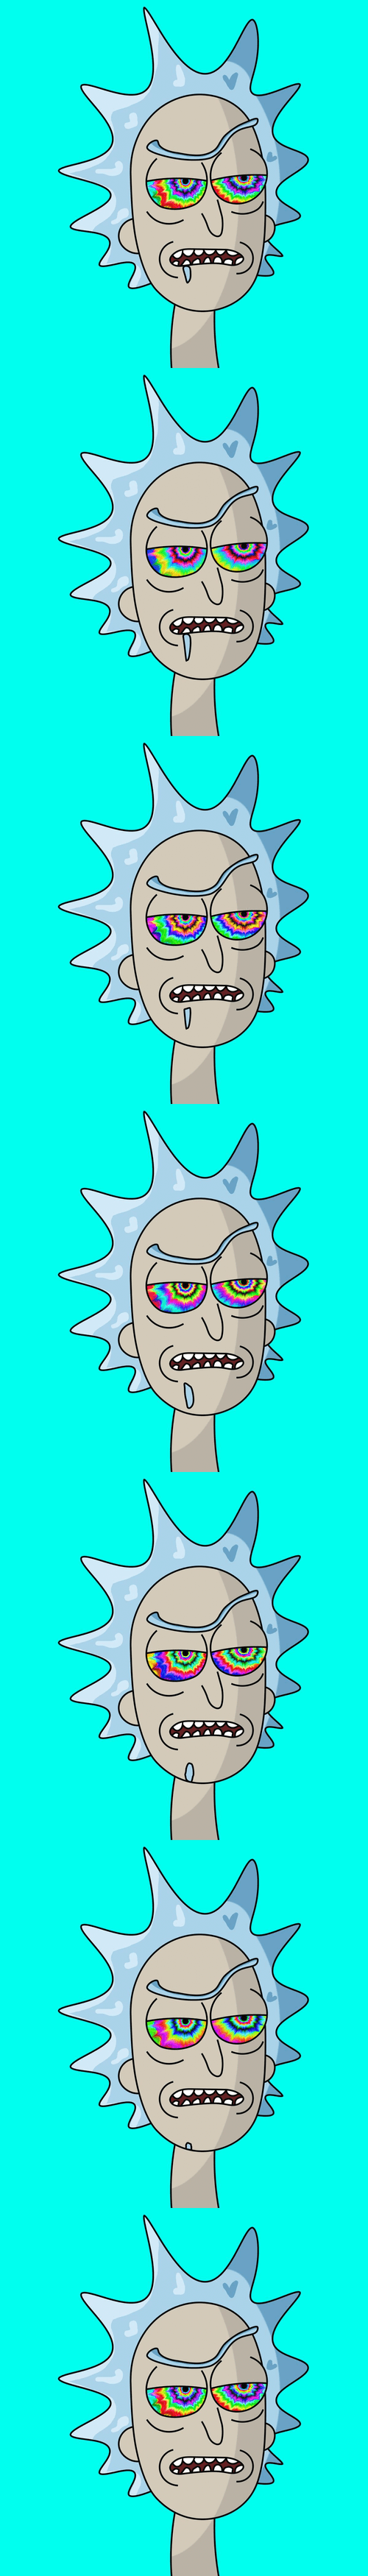 Stoned Rick